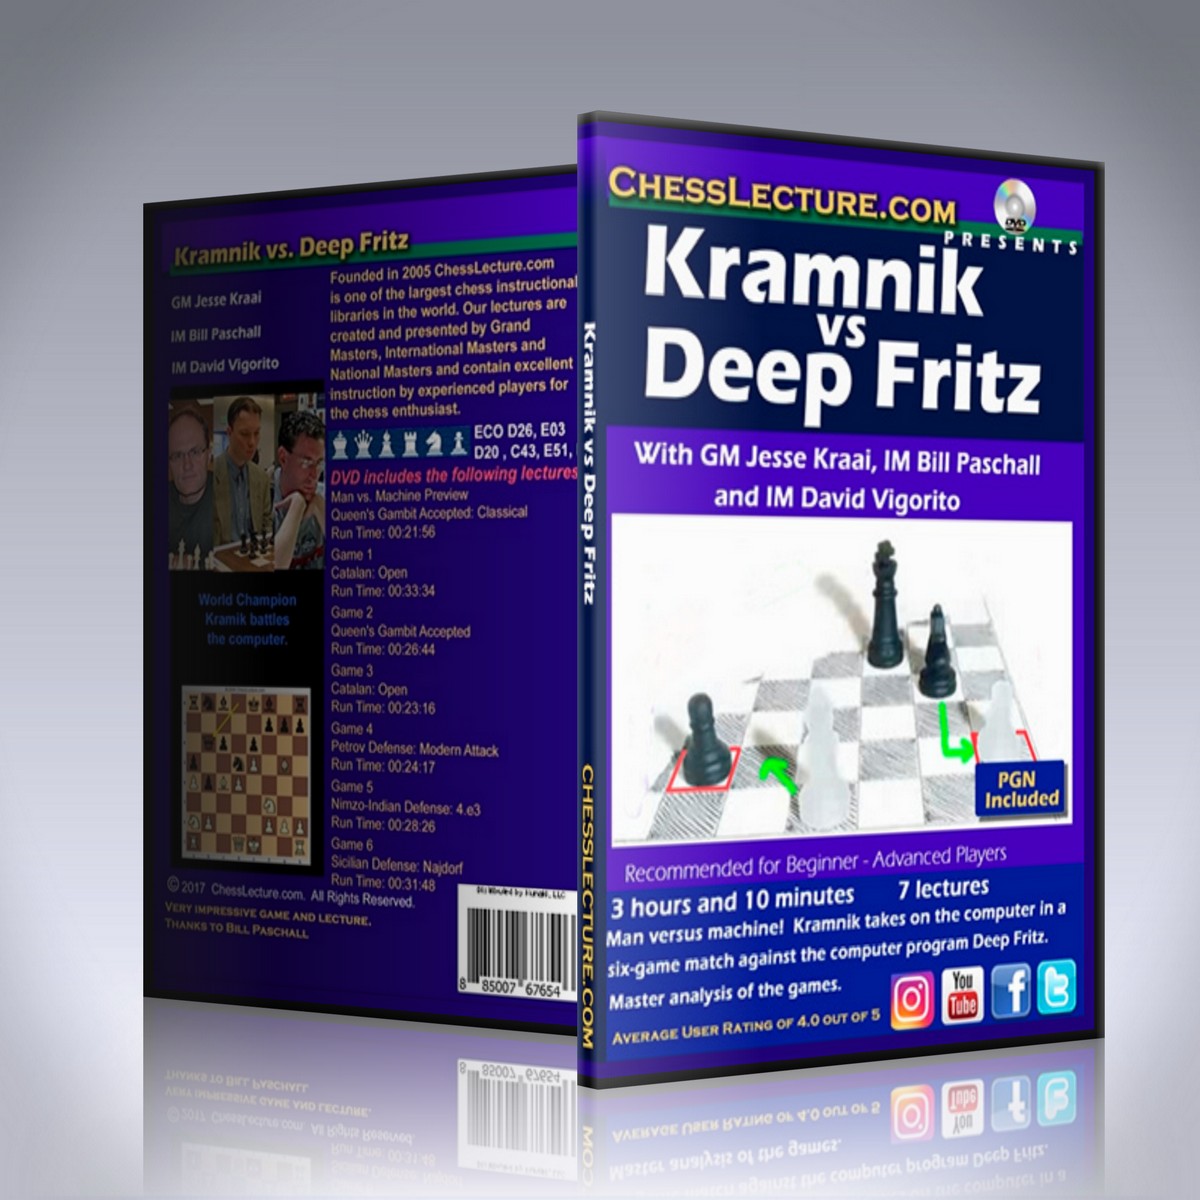 Kramnik vs Deep Fritz – GM Jesse Kraai, IM Bill Paschall and IM David Vigorito